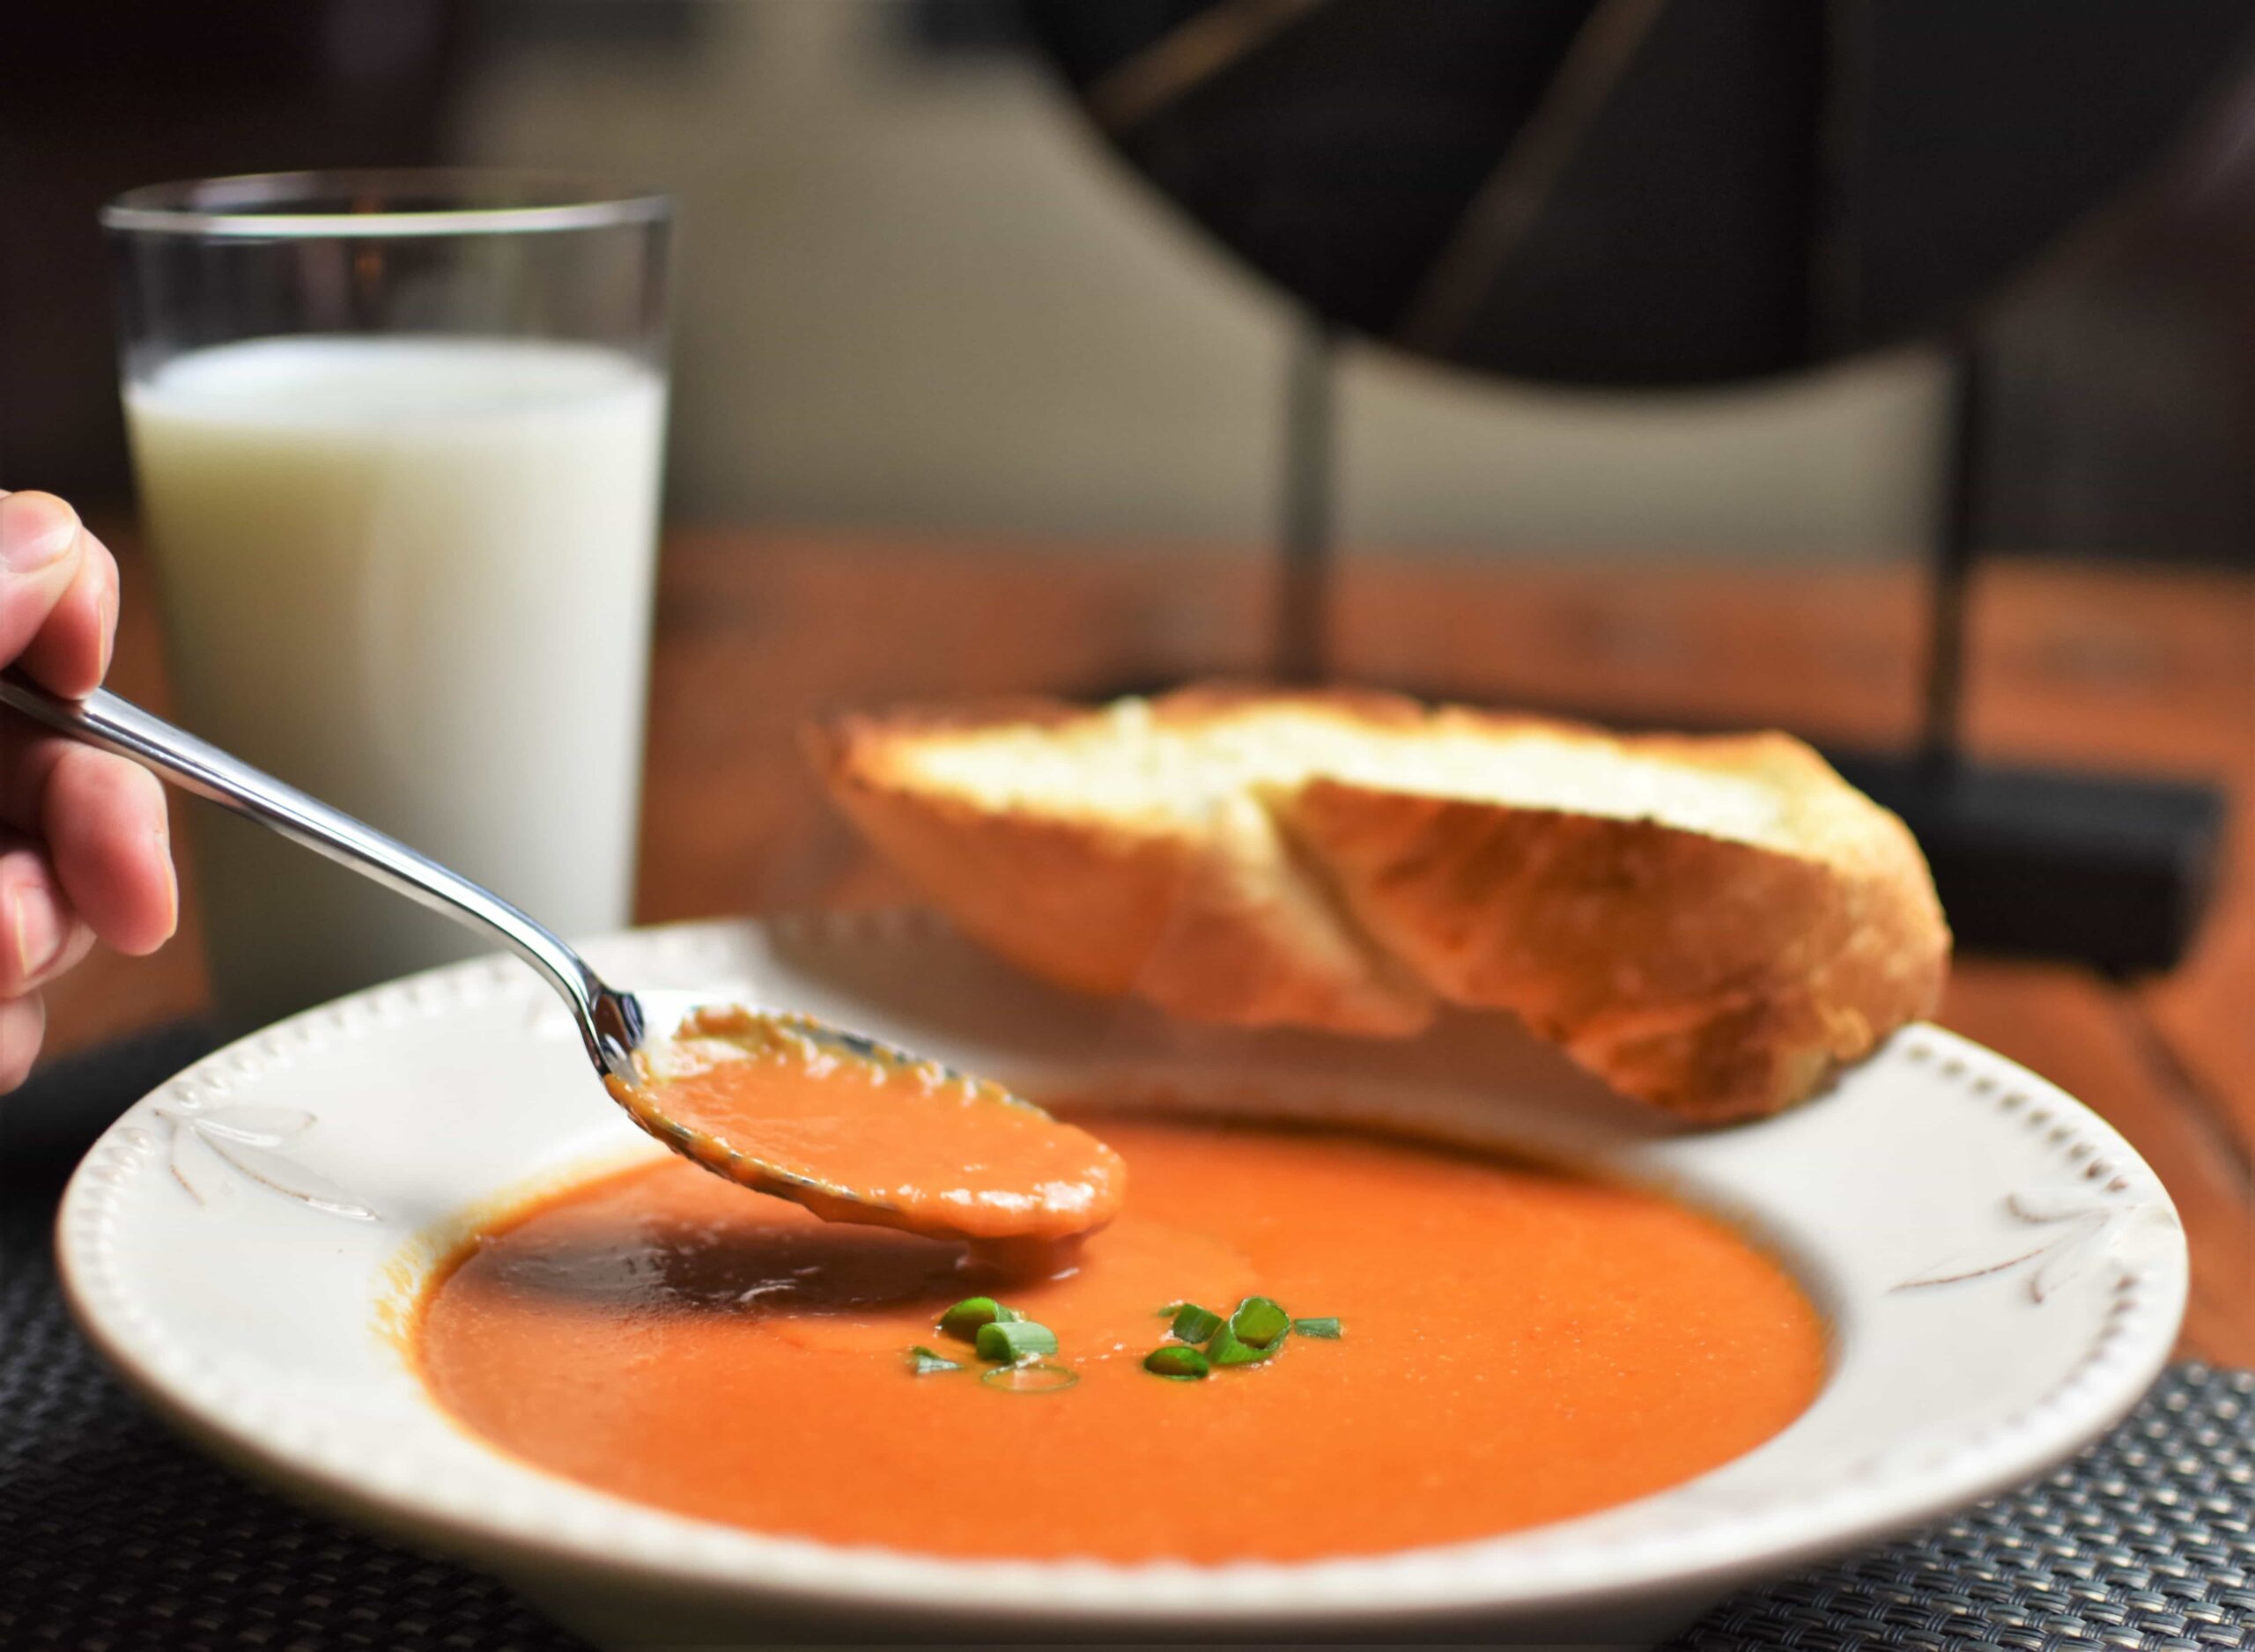 Creamy Tomato Soup that Warms the Soul